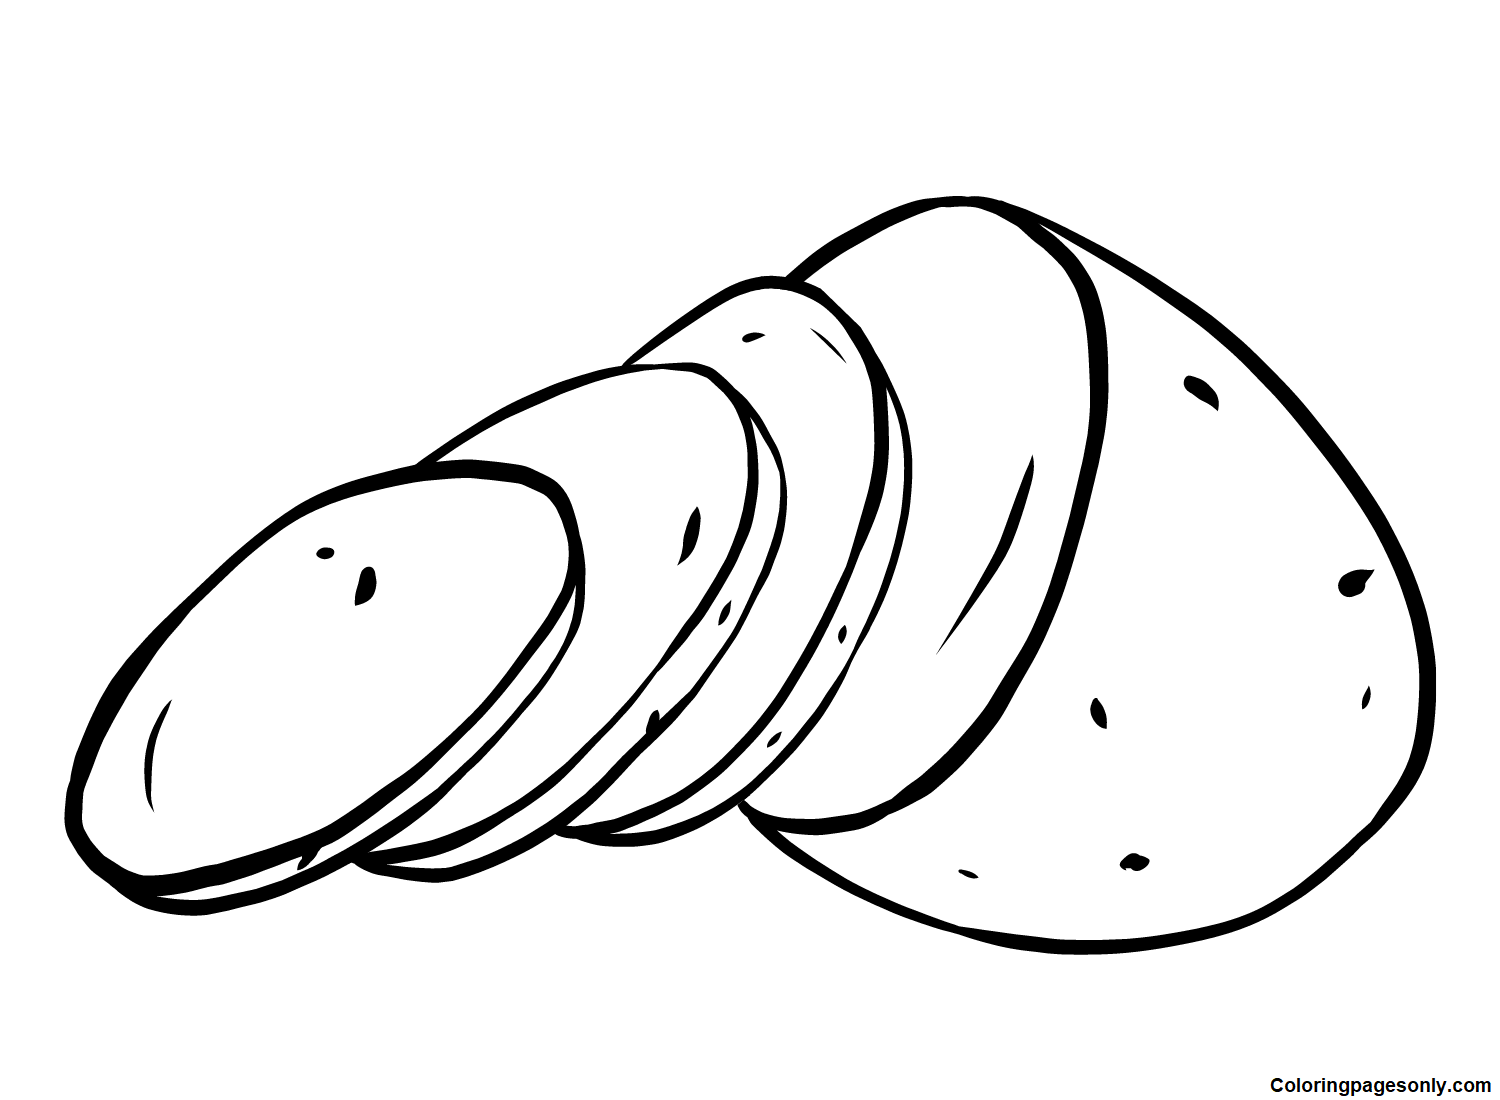 Sliced Potato from Potato